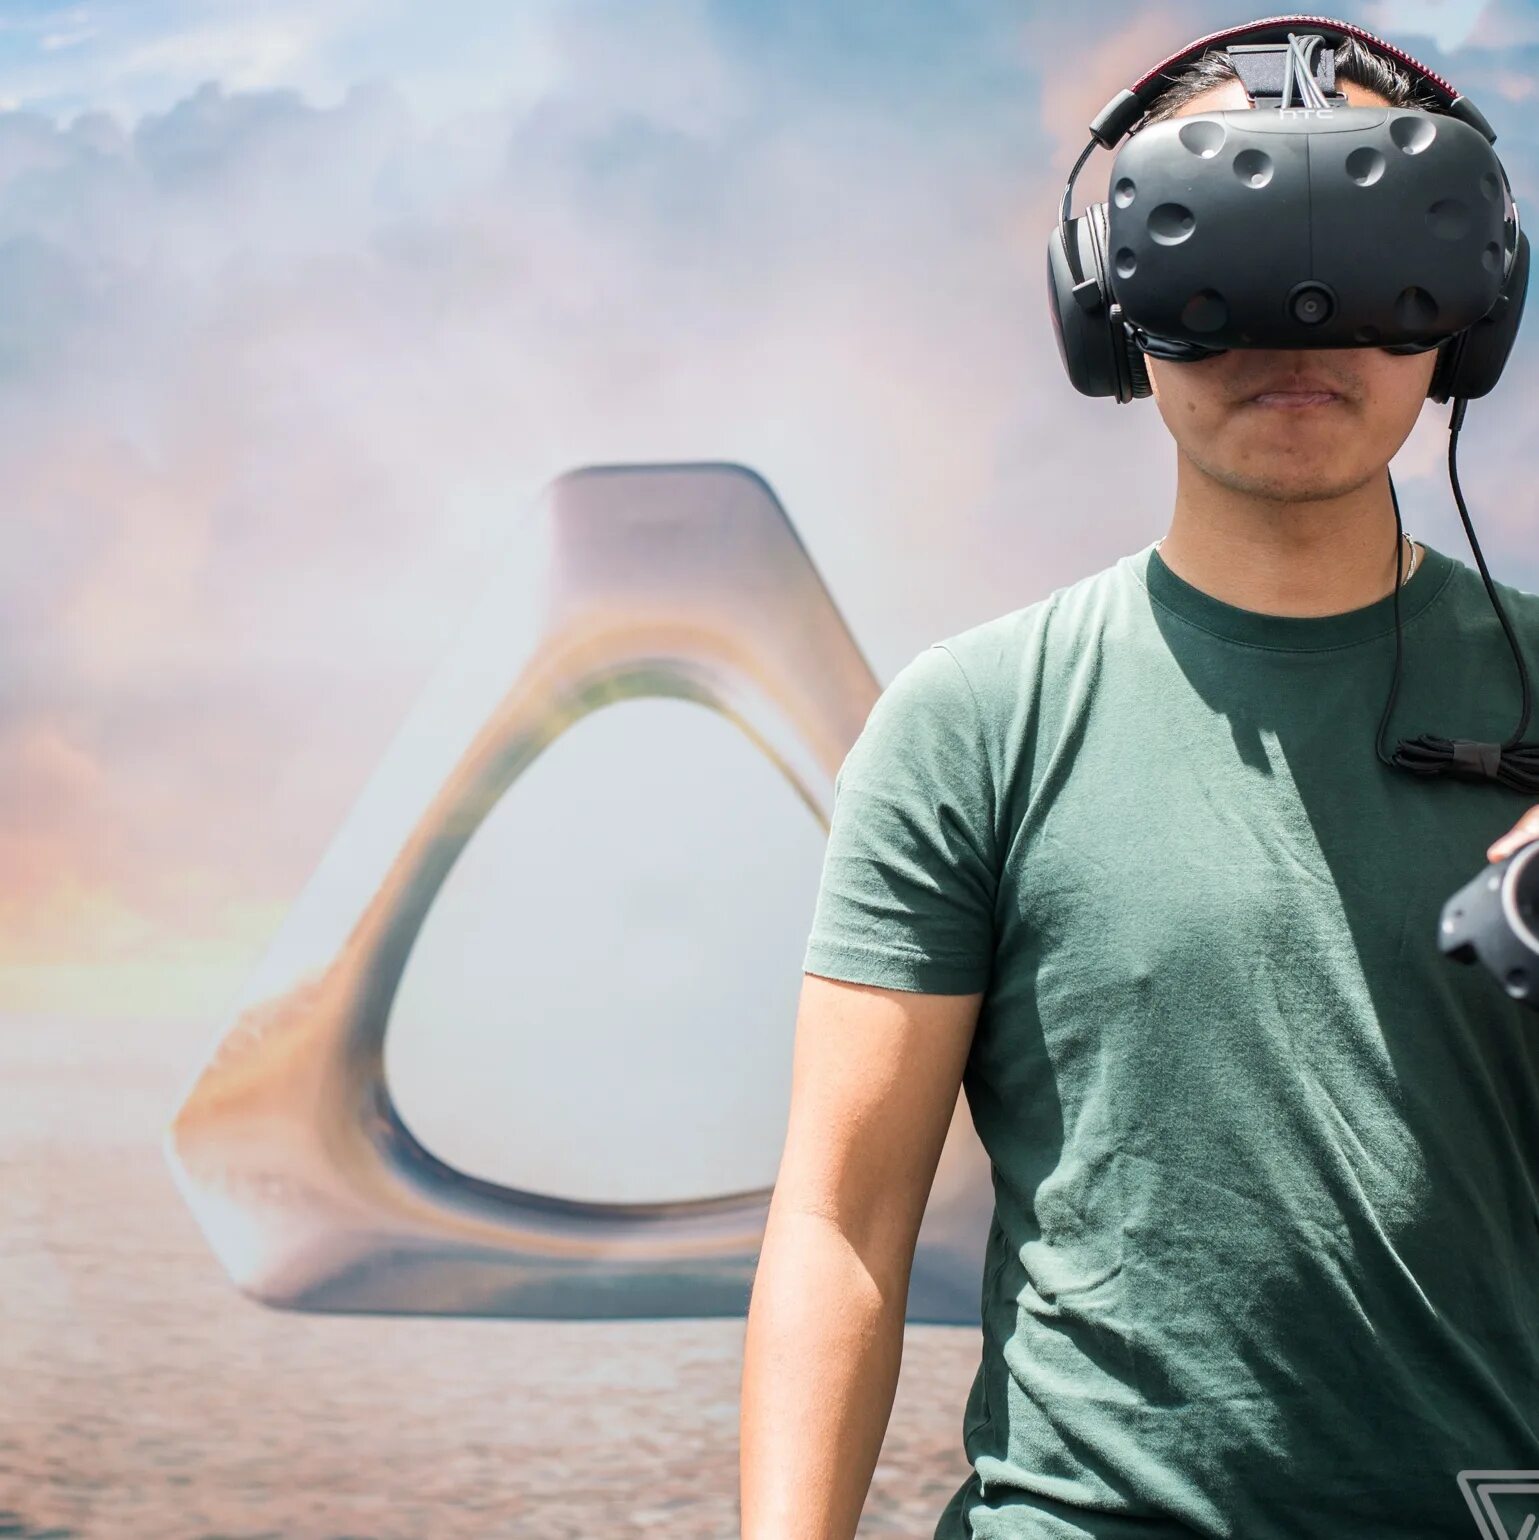 Vr реклама. Очки виртуальной реальности. Шлем виртуальной реальности. Человек в шлеме виртуальной реальности. Ребенок в шлеме виртуальной реальности.